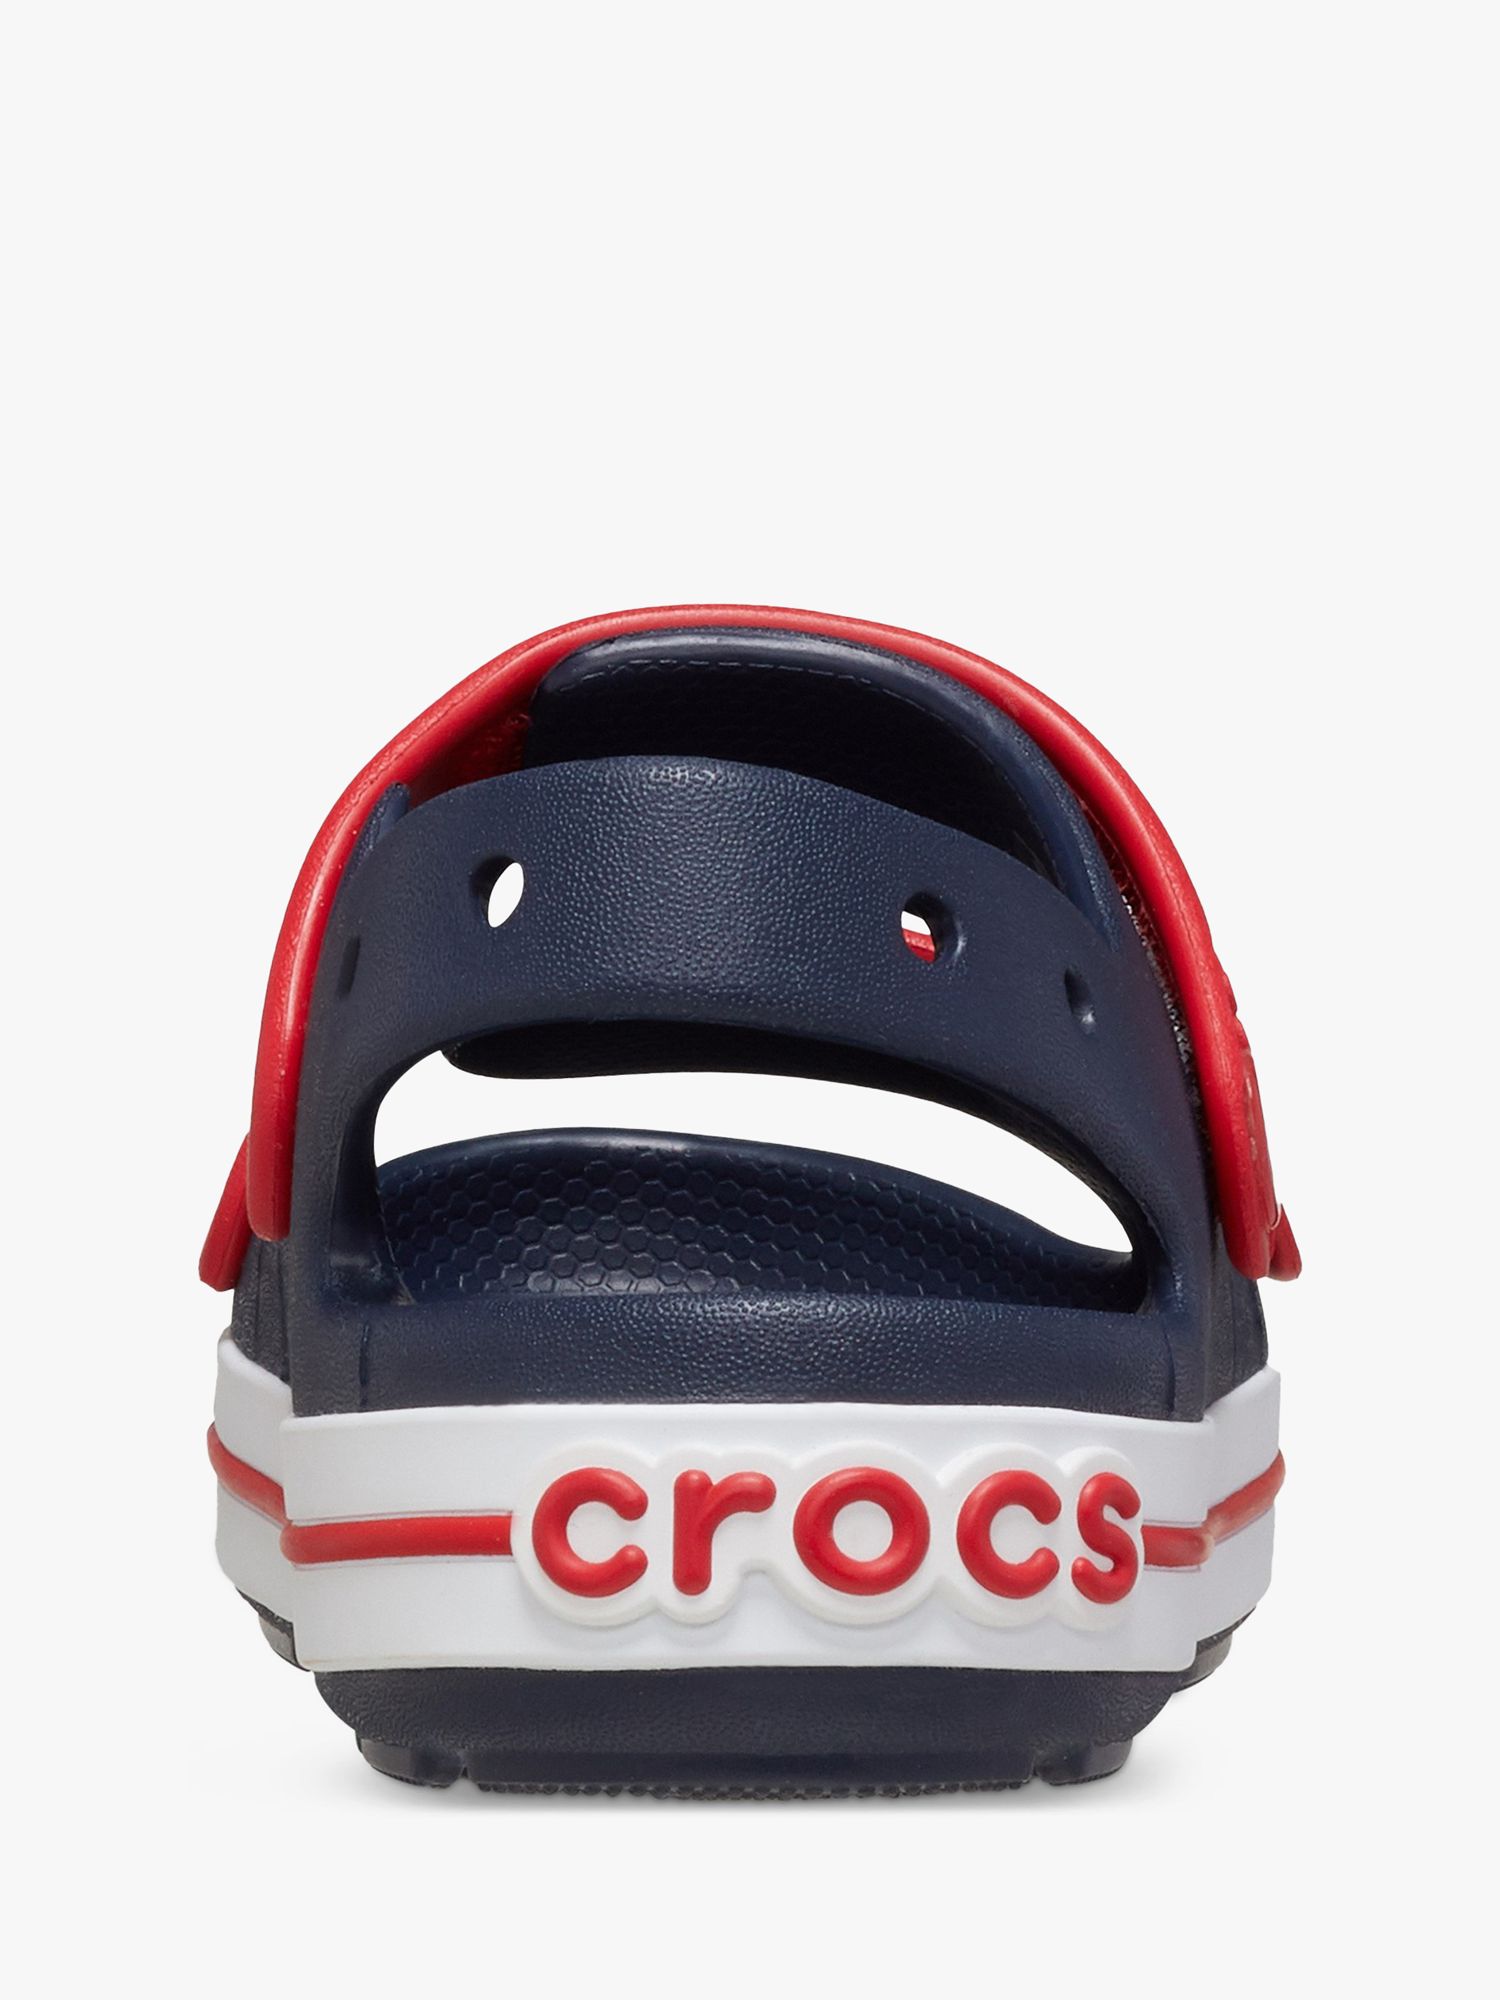 Crocs Kids' Crocband Play Sandals, Navy, 1